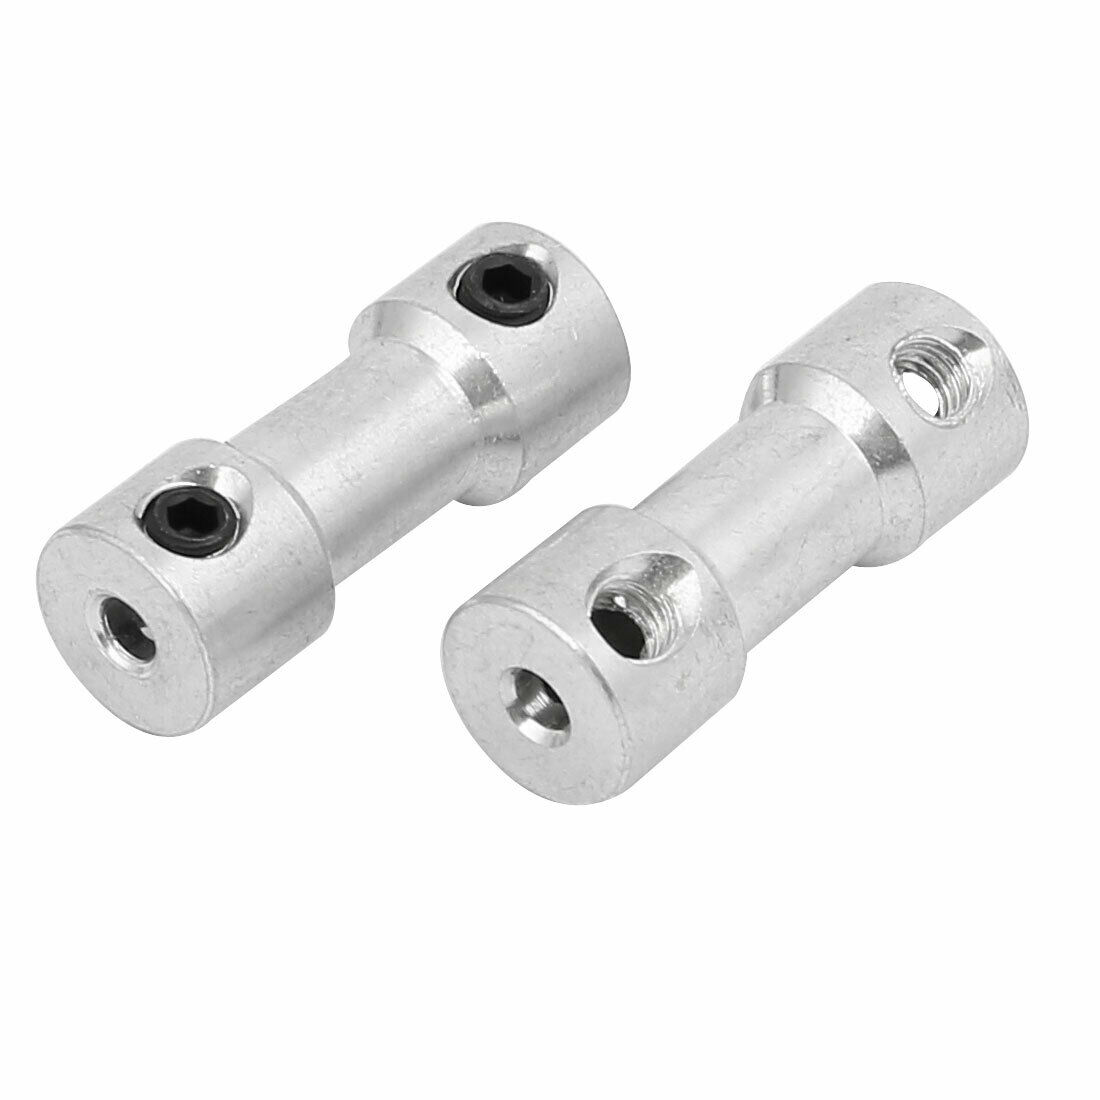 2 Pcs Aluminum Push Rod Connector Adapter for RC Model Silver Tone